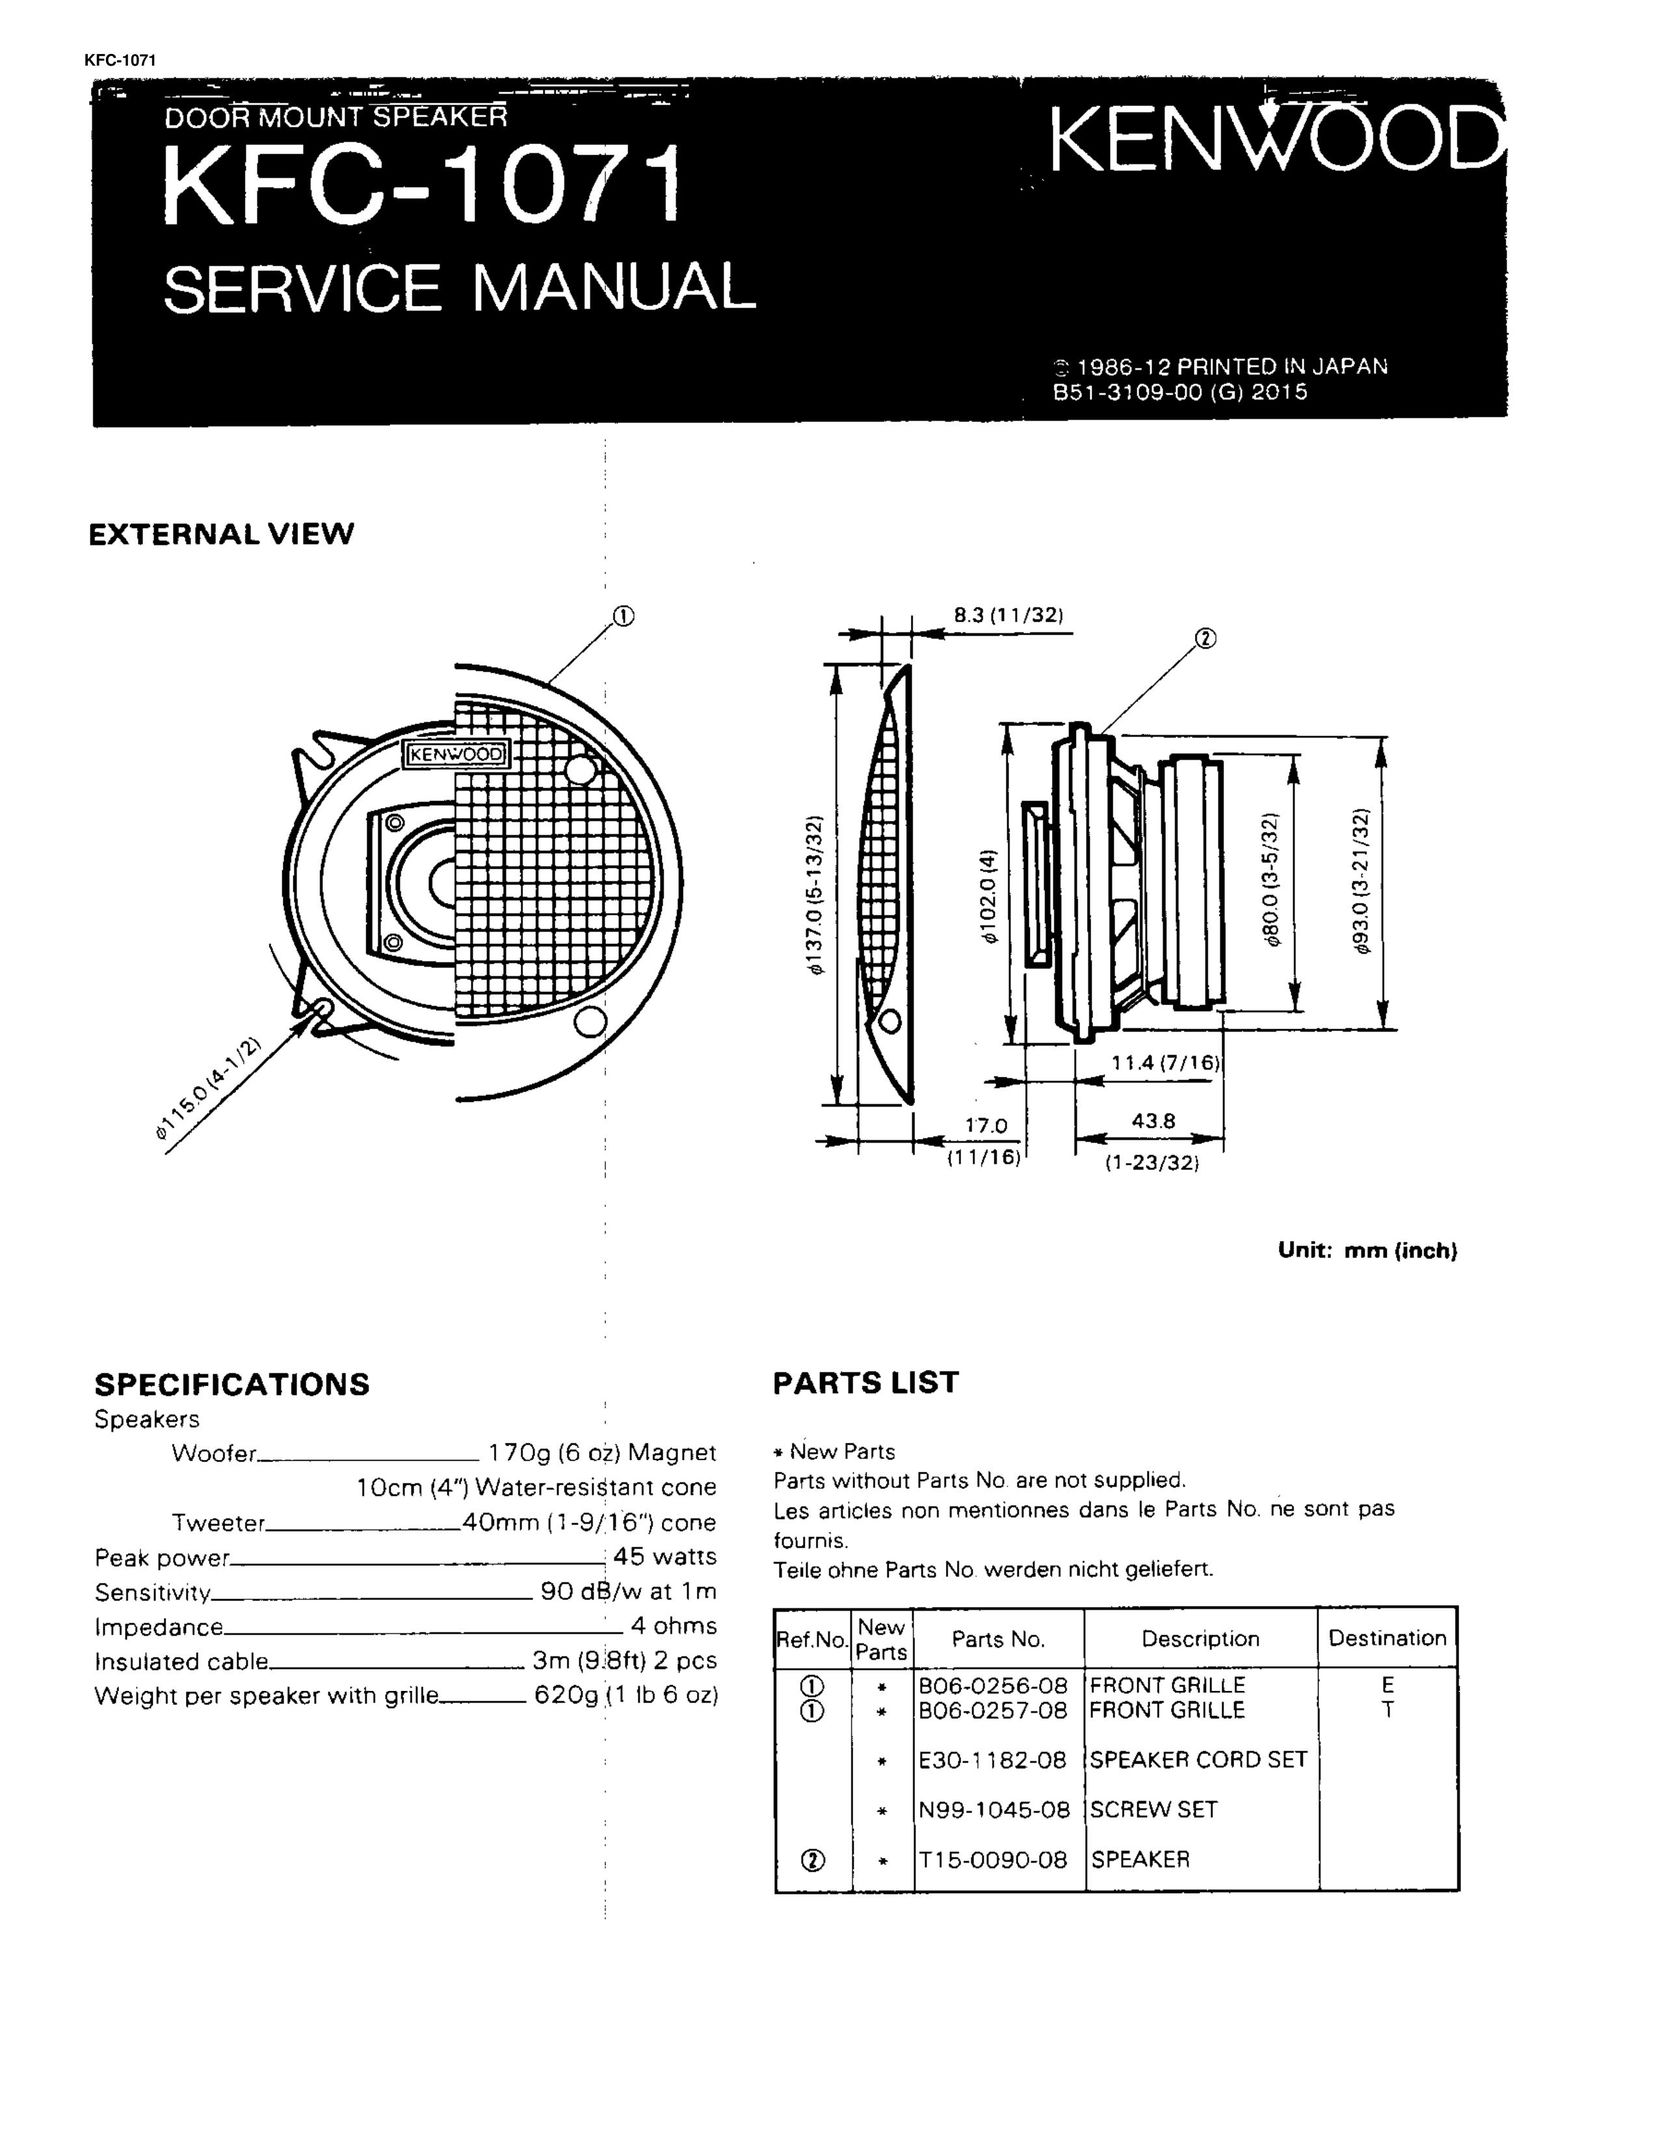 Kenwood KFC-1071 Speaker User Manual